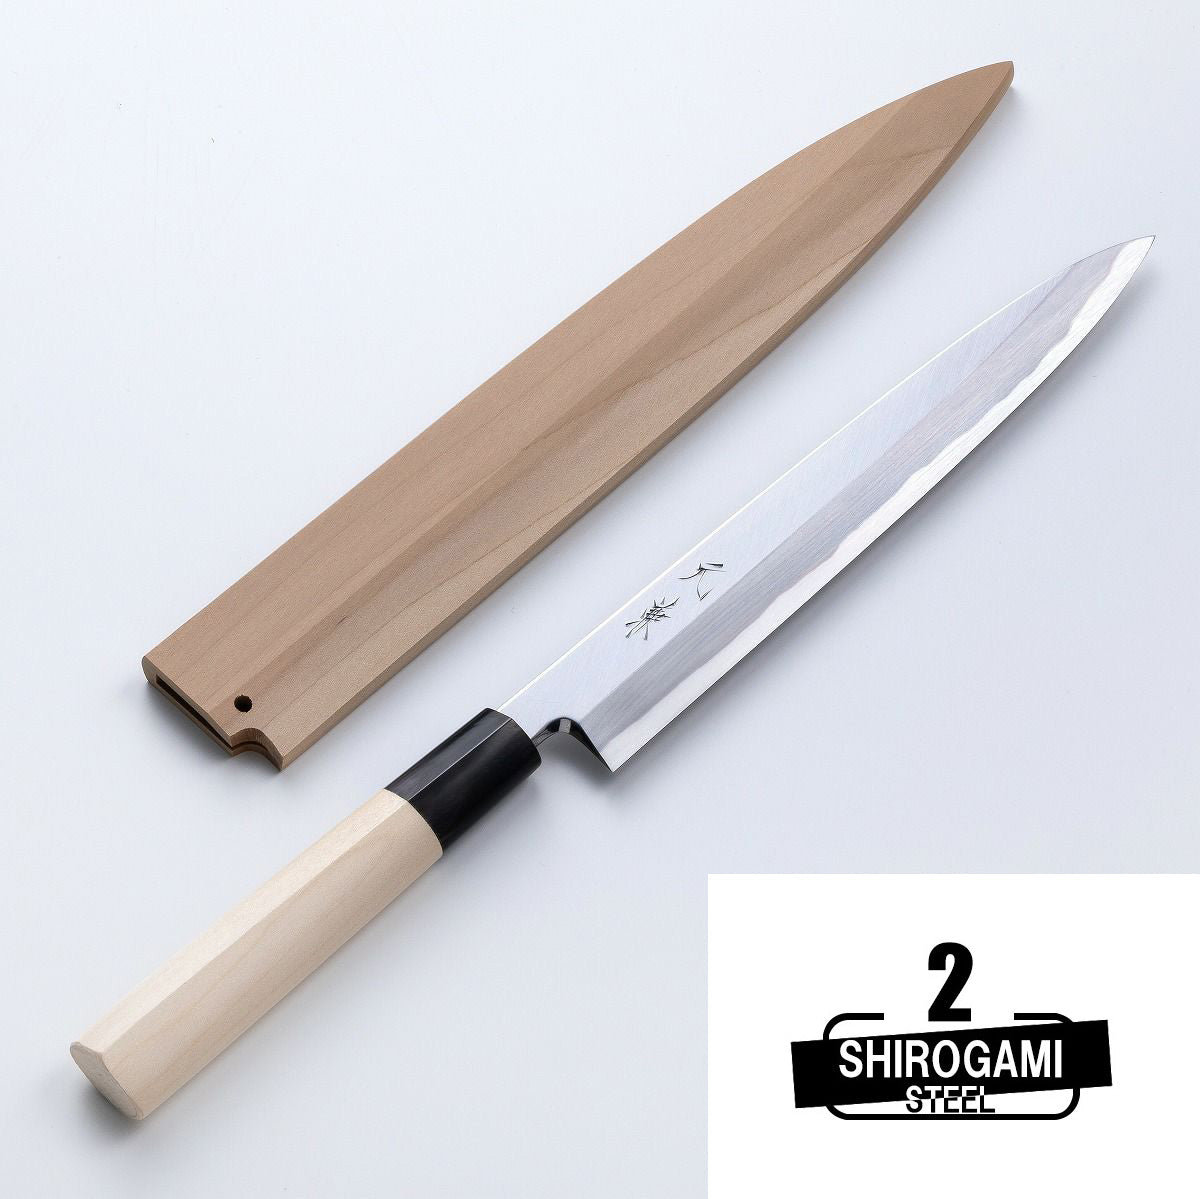 Knives Set Kanmuri - Japanese Knives - Sushi Knives - My Japanese Home